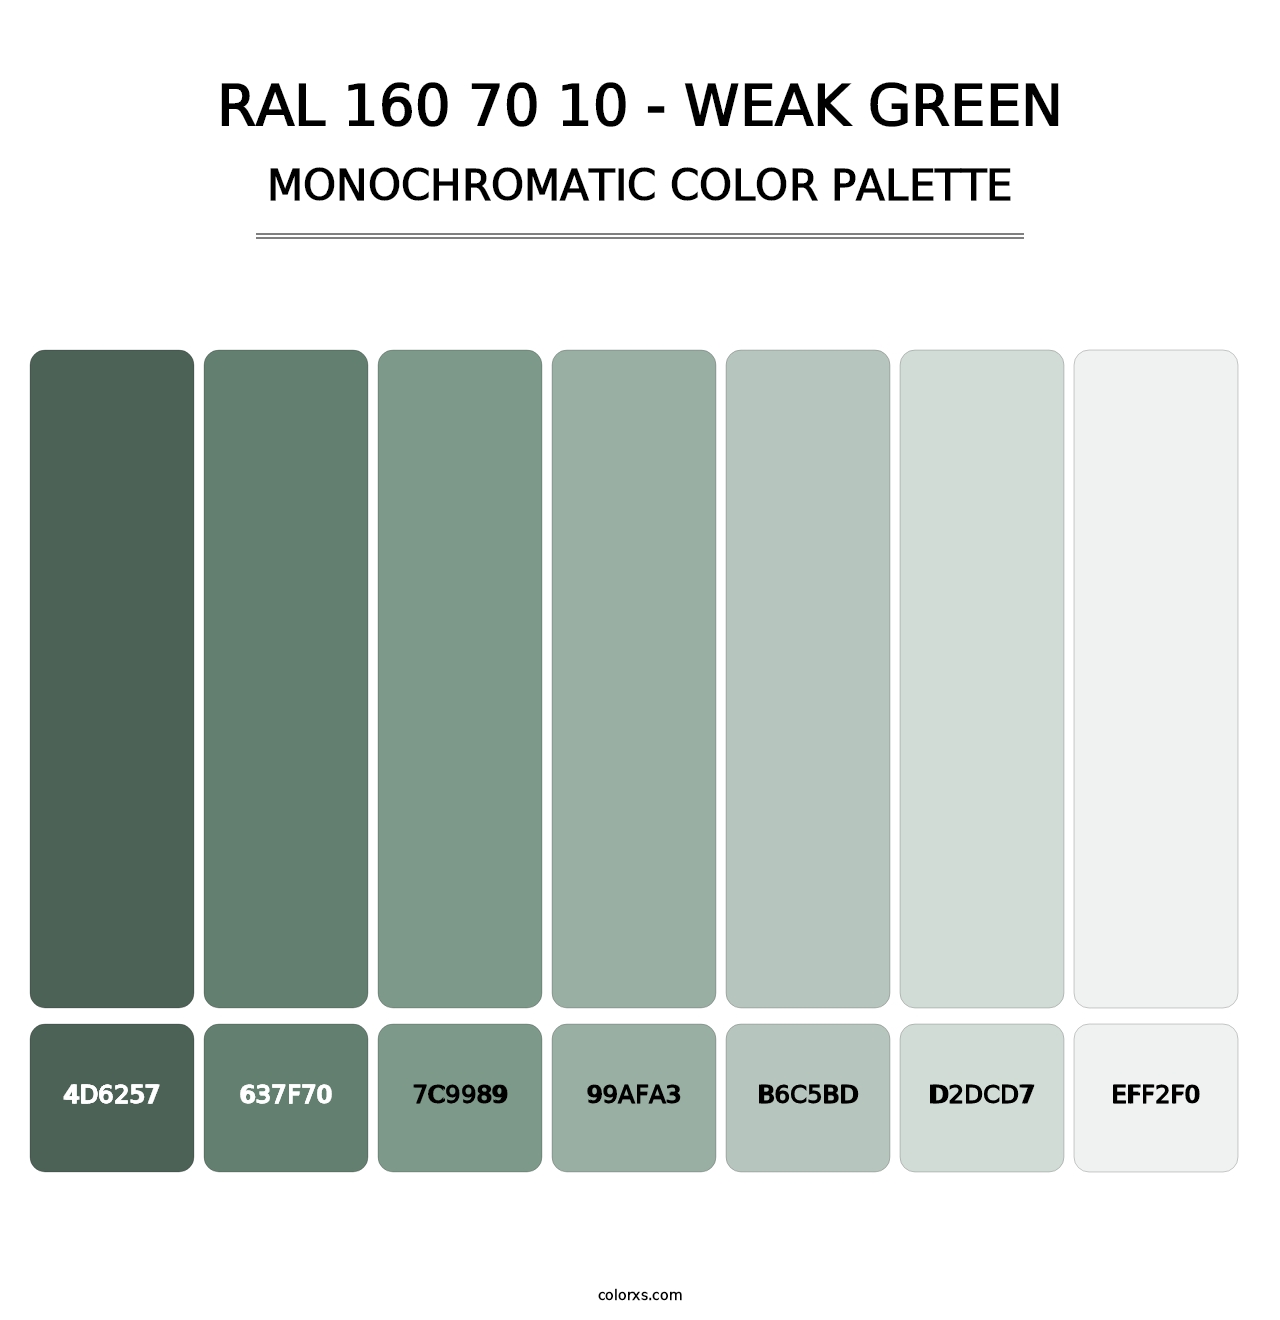 RAL 160 70 10 - Weak Green - Monochromatic Color Palette